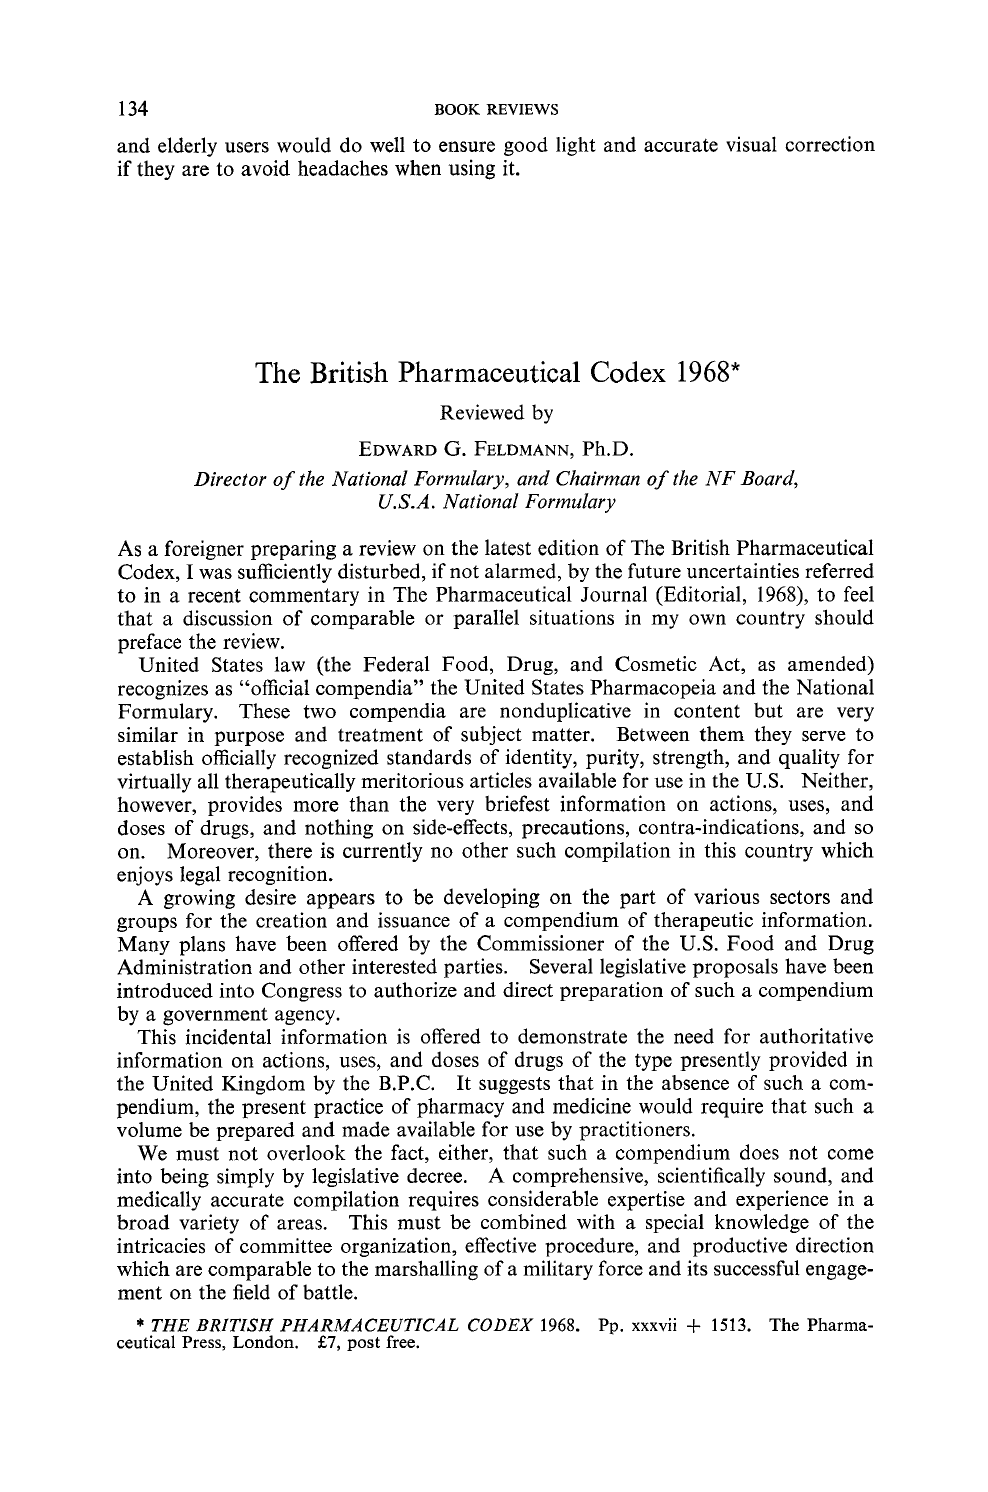 british pharmaceutical codex pdf 2016 - and reviews